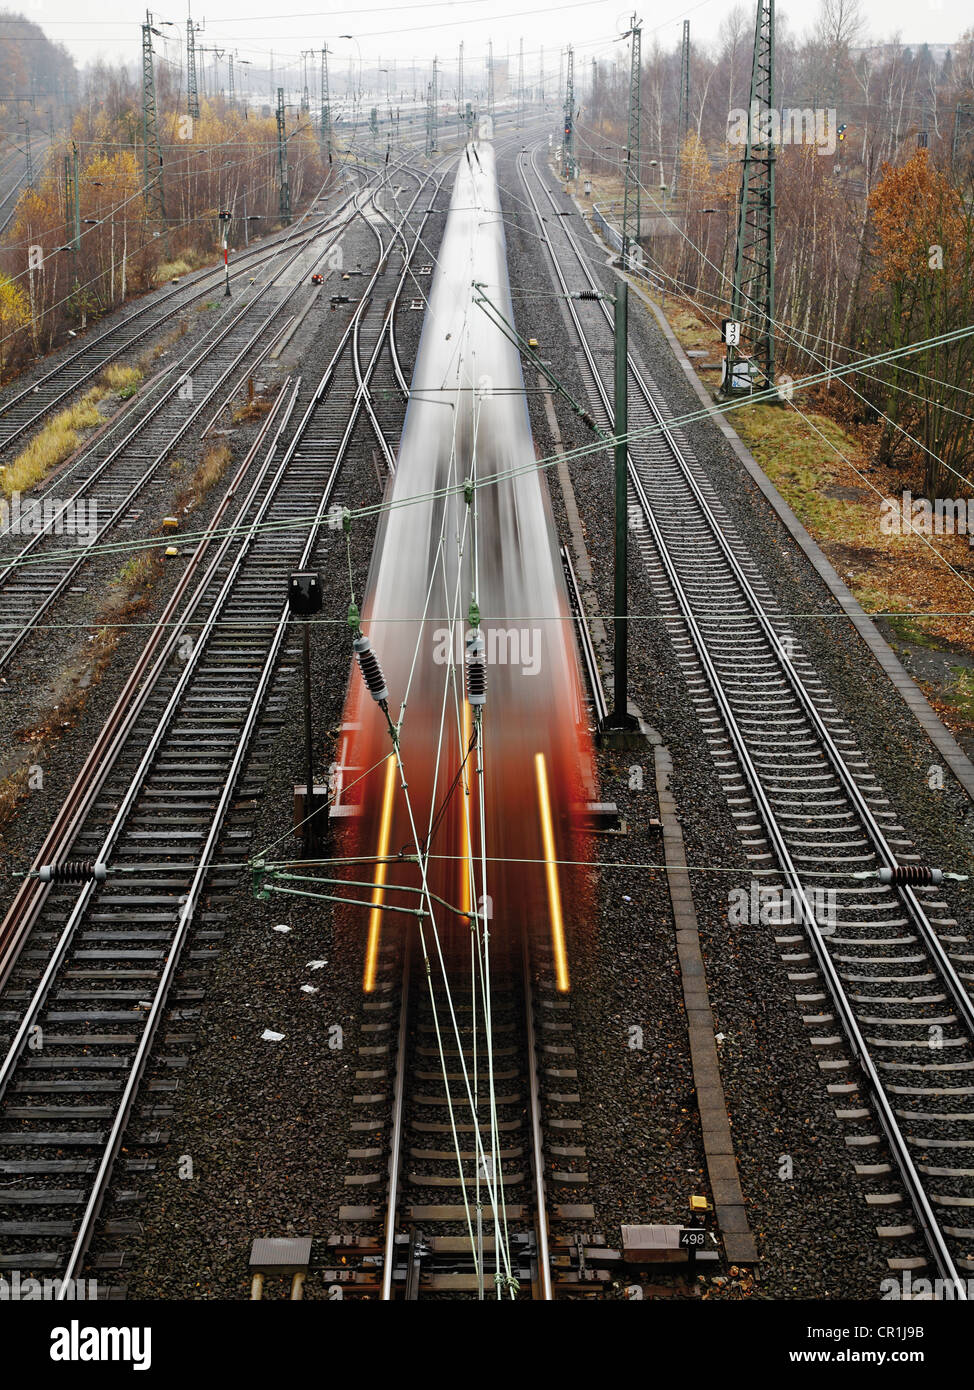 Train in motion, public transportation, railroad track Stock Photo